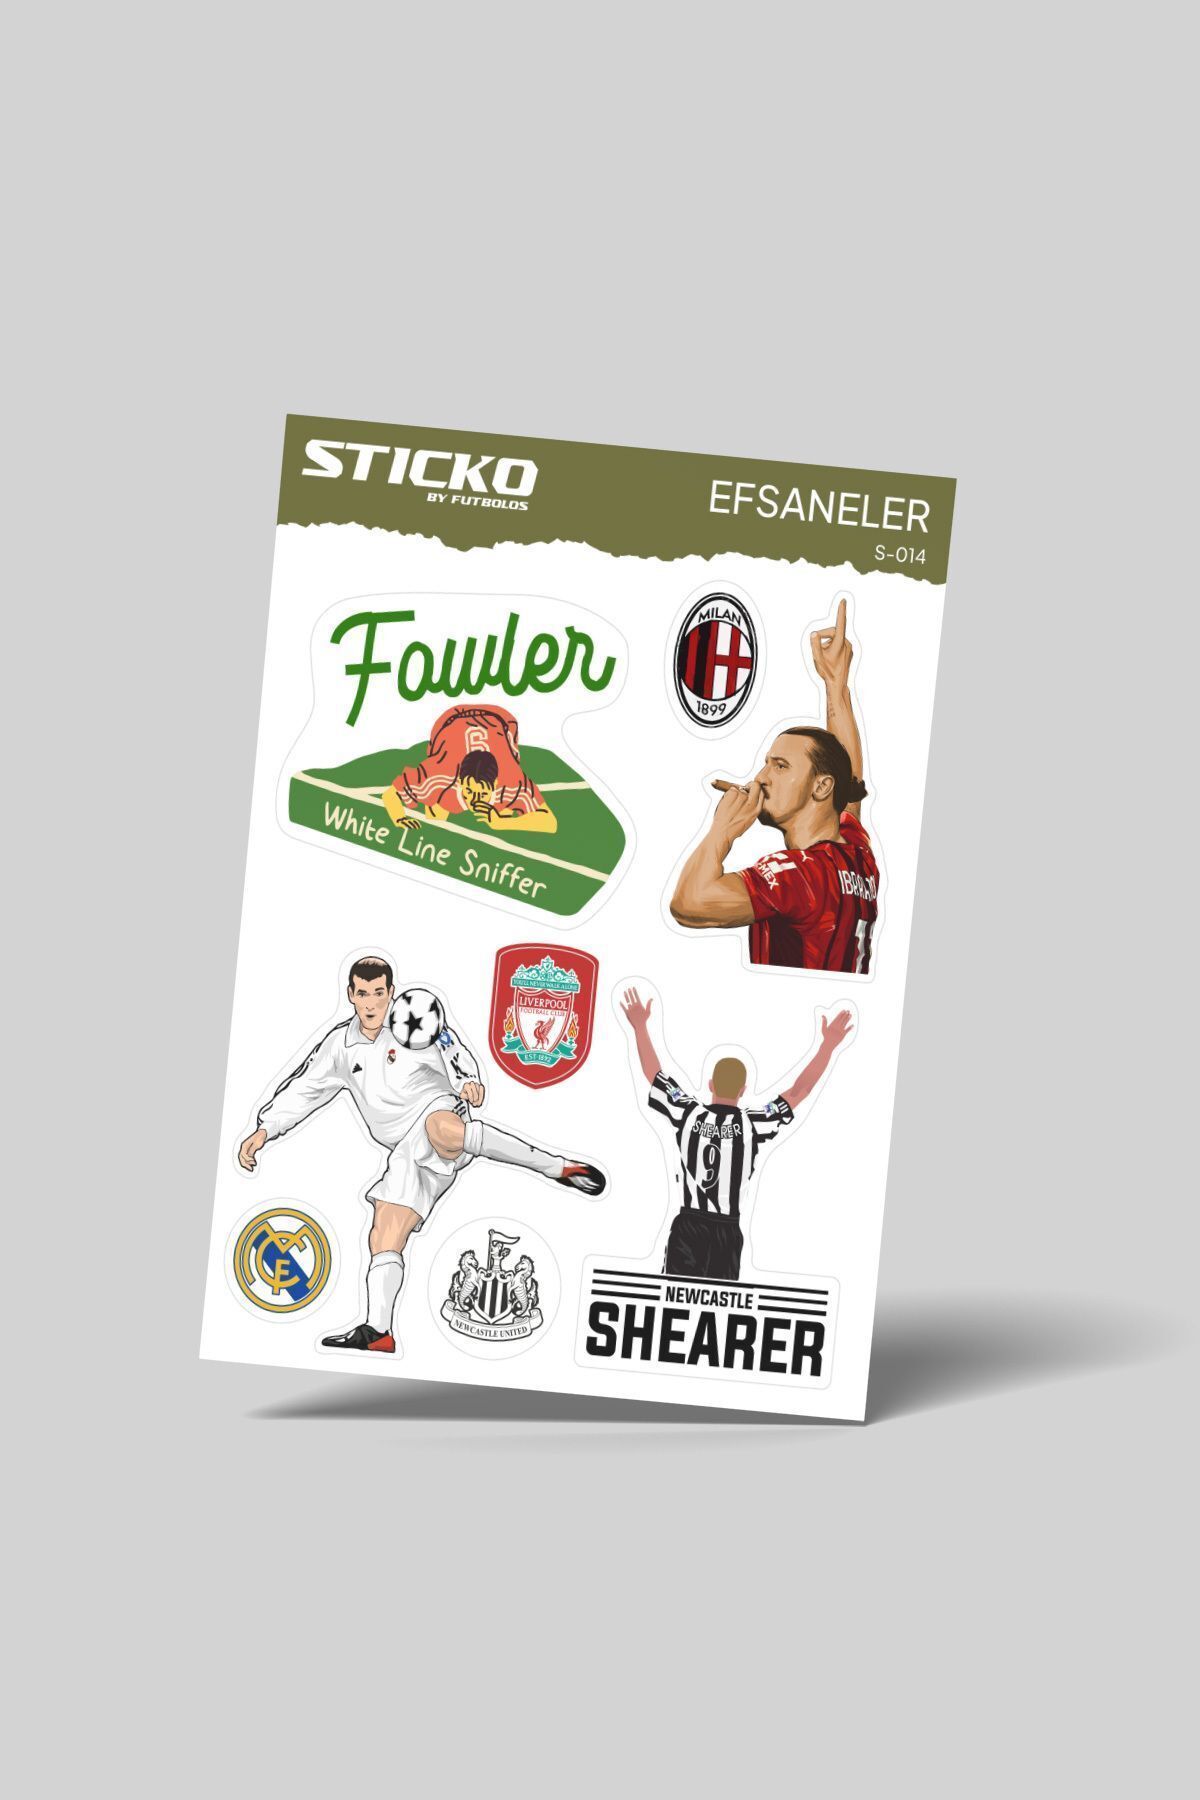 Futbolos Efsane Futbolcular Sticker – Fowler, İbrahimoviç, Zidane, Sharer Etiket